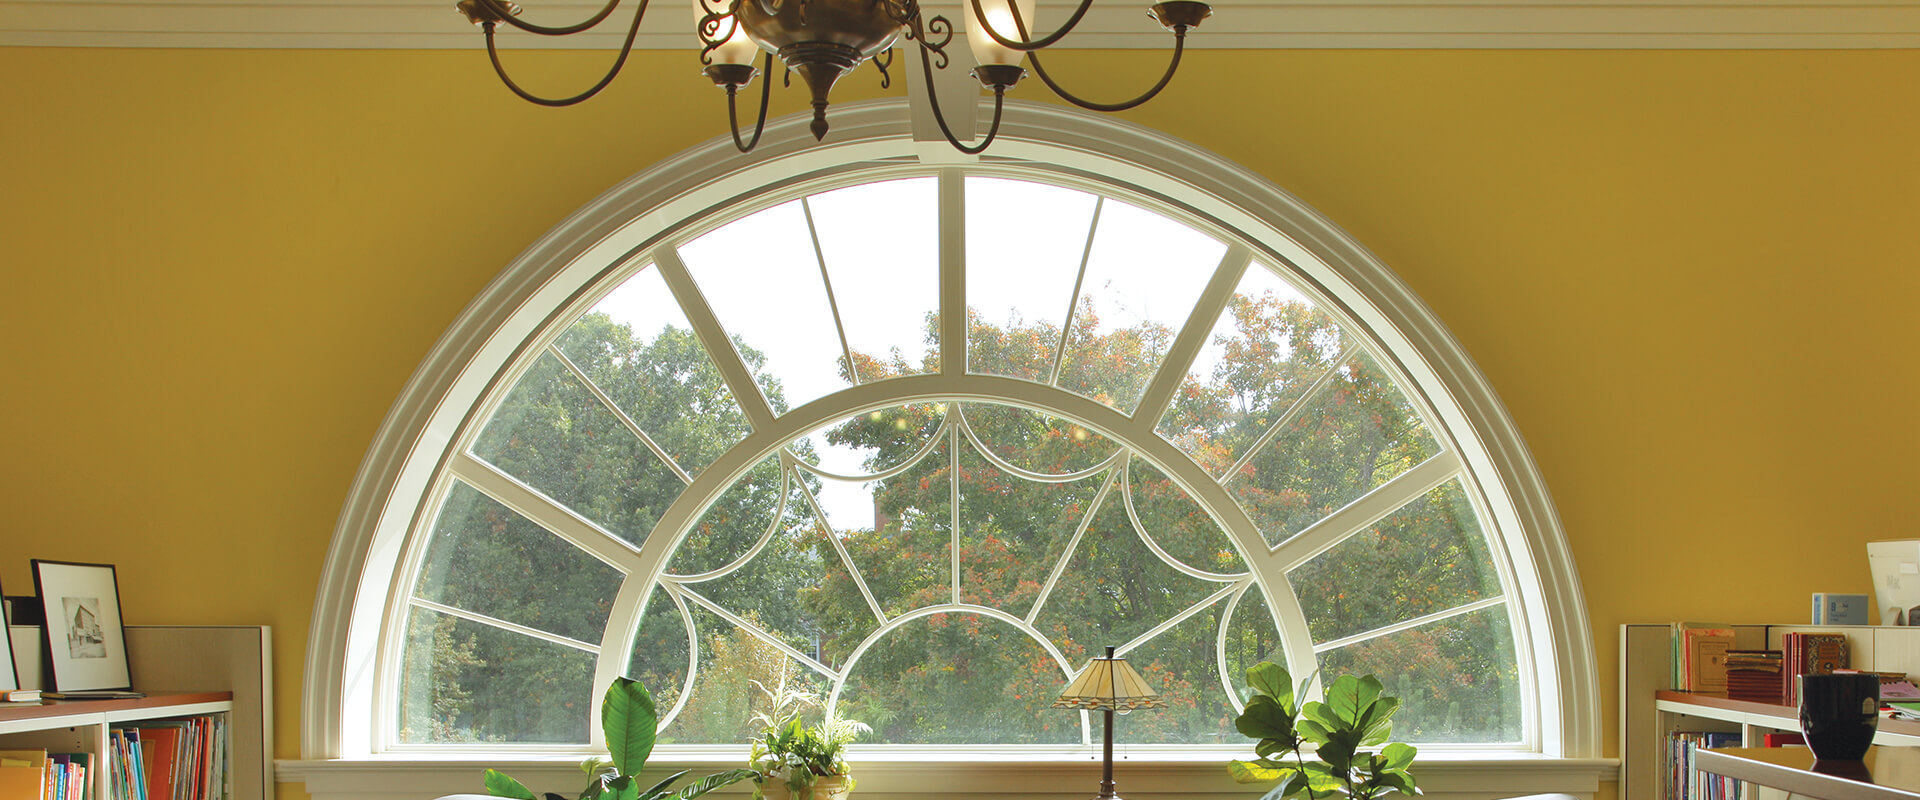 10 Stunning Arched Window Home Design Ideas | Kolbe Windows & Doors